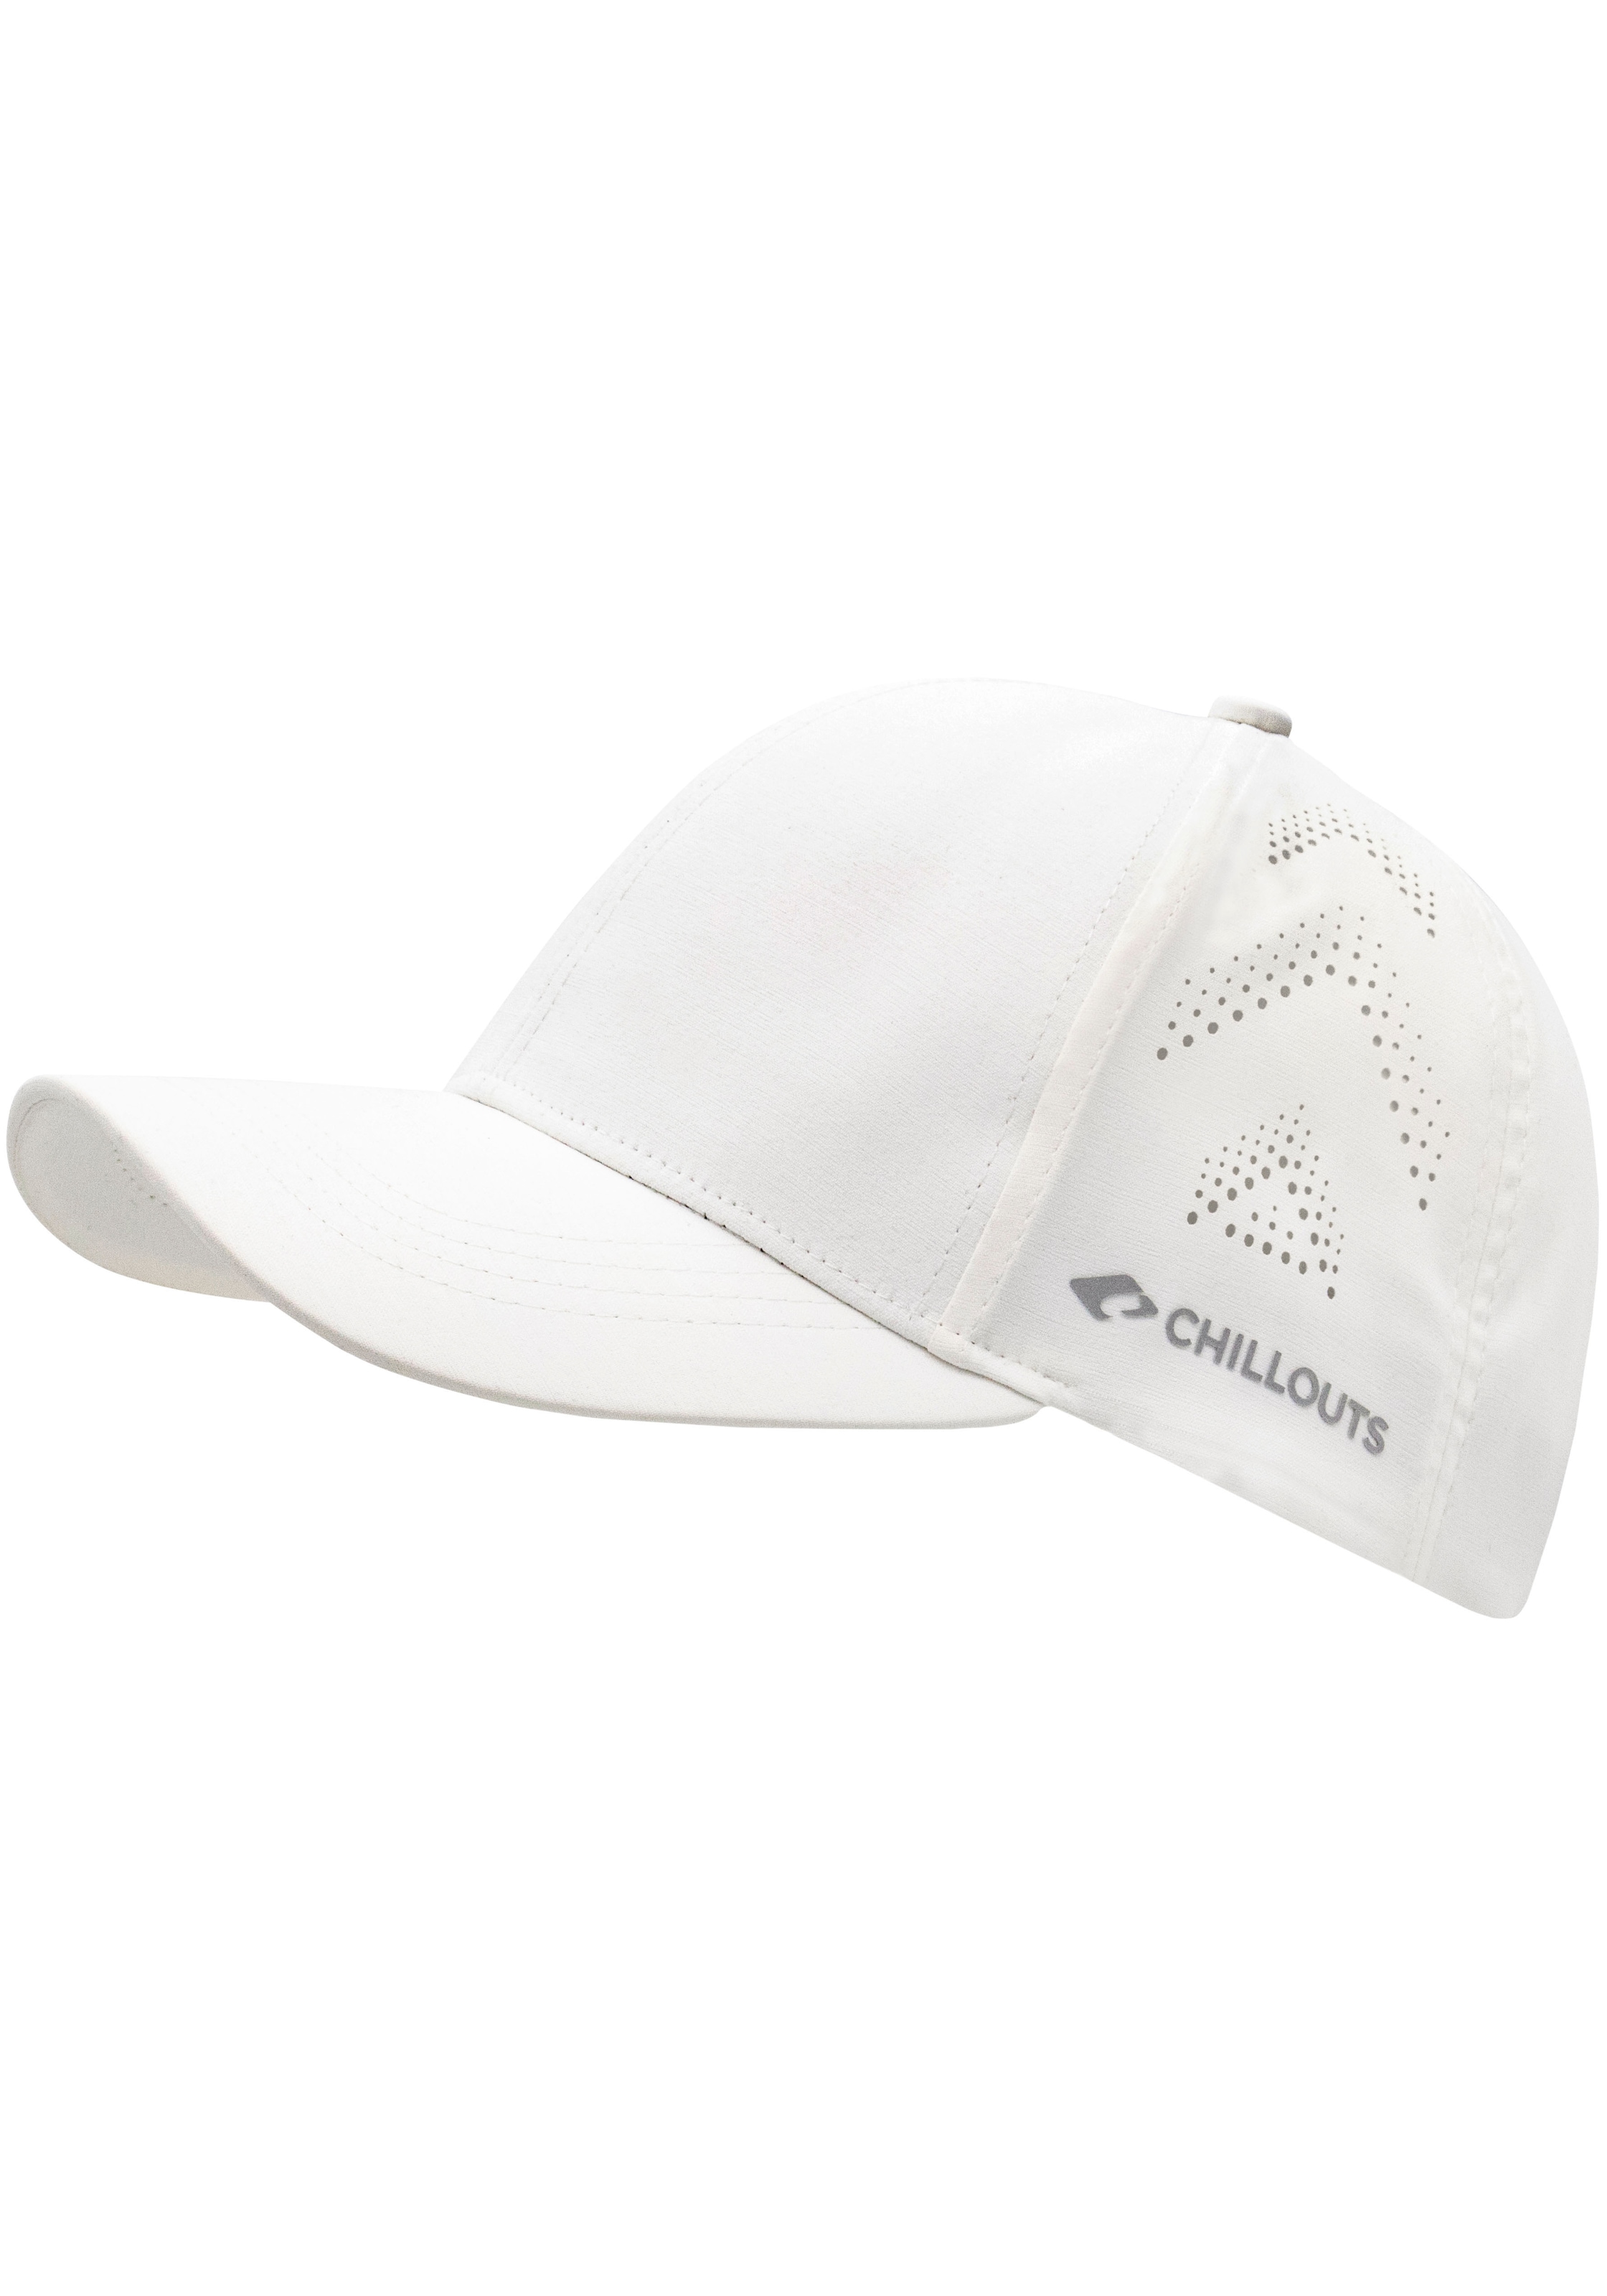 chillouts Baseball Cap, Philadelphia Hat, Cap mit Klettverschluß, UPF50+